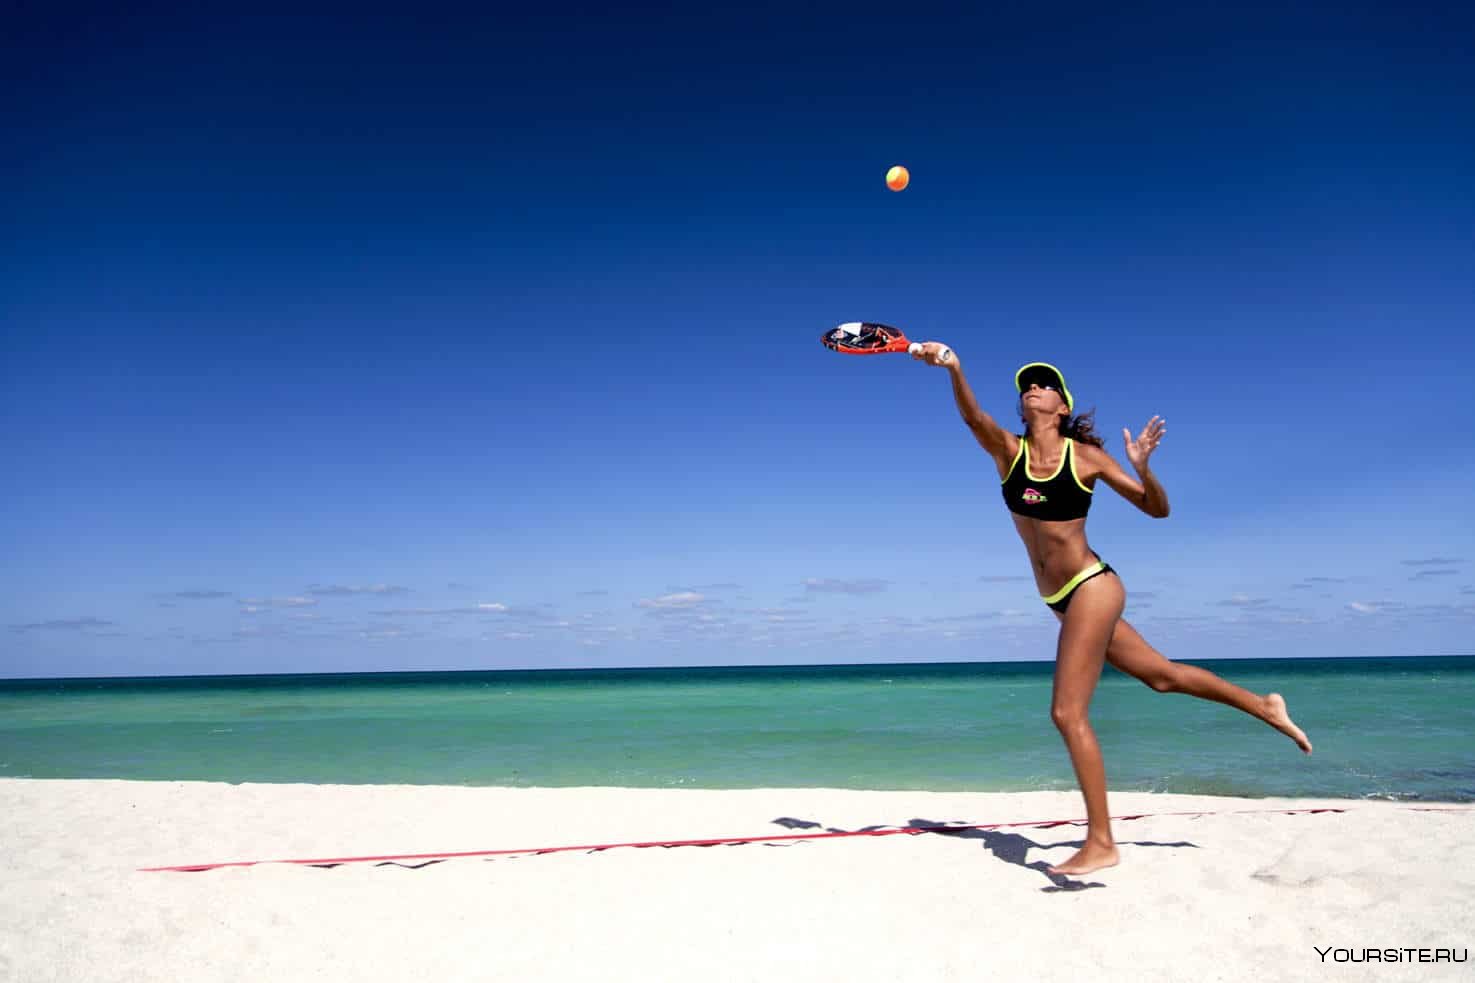 Какие предметы на пляже. Пляжный теннис. Бадминтон на пляже. Теннис на пляже. Спорт на пляже.